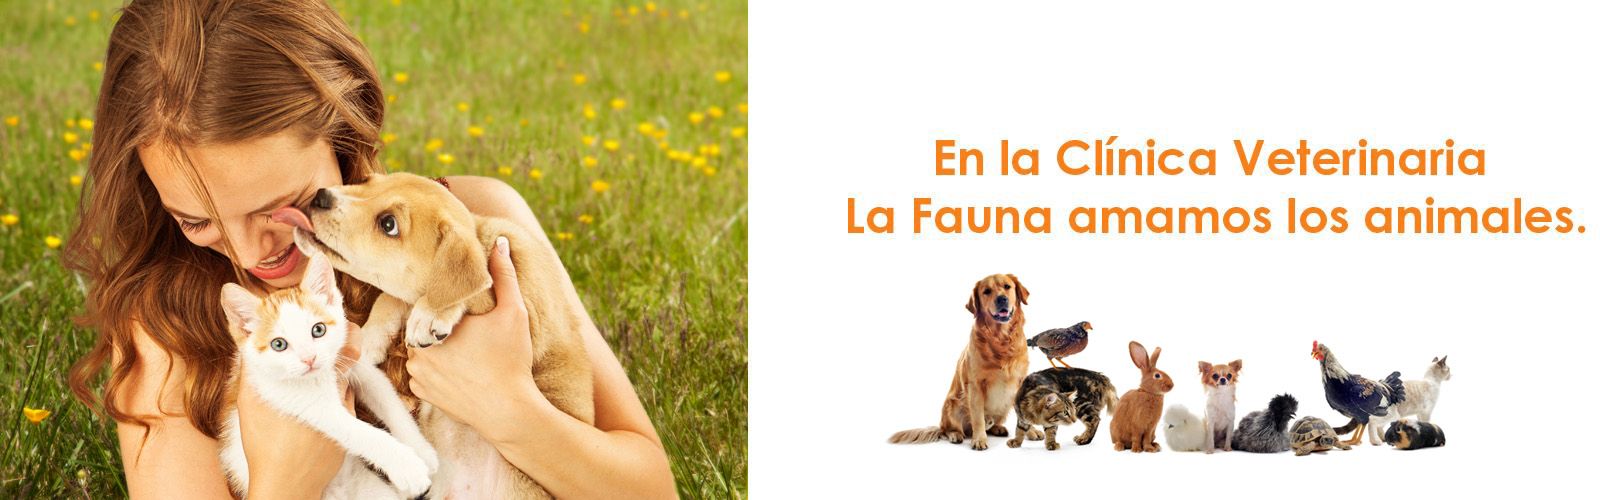 Clínica Veterinaria La Fauna banner 1